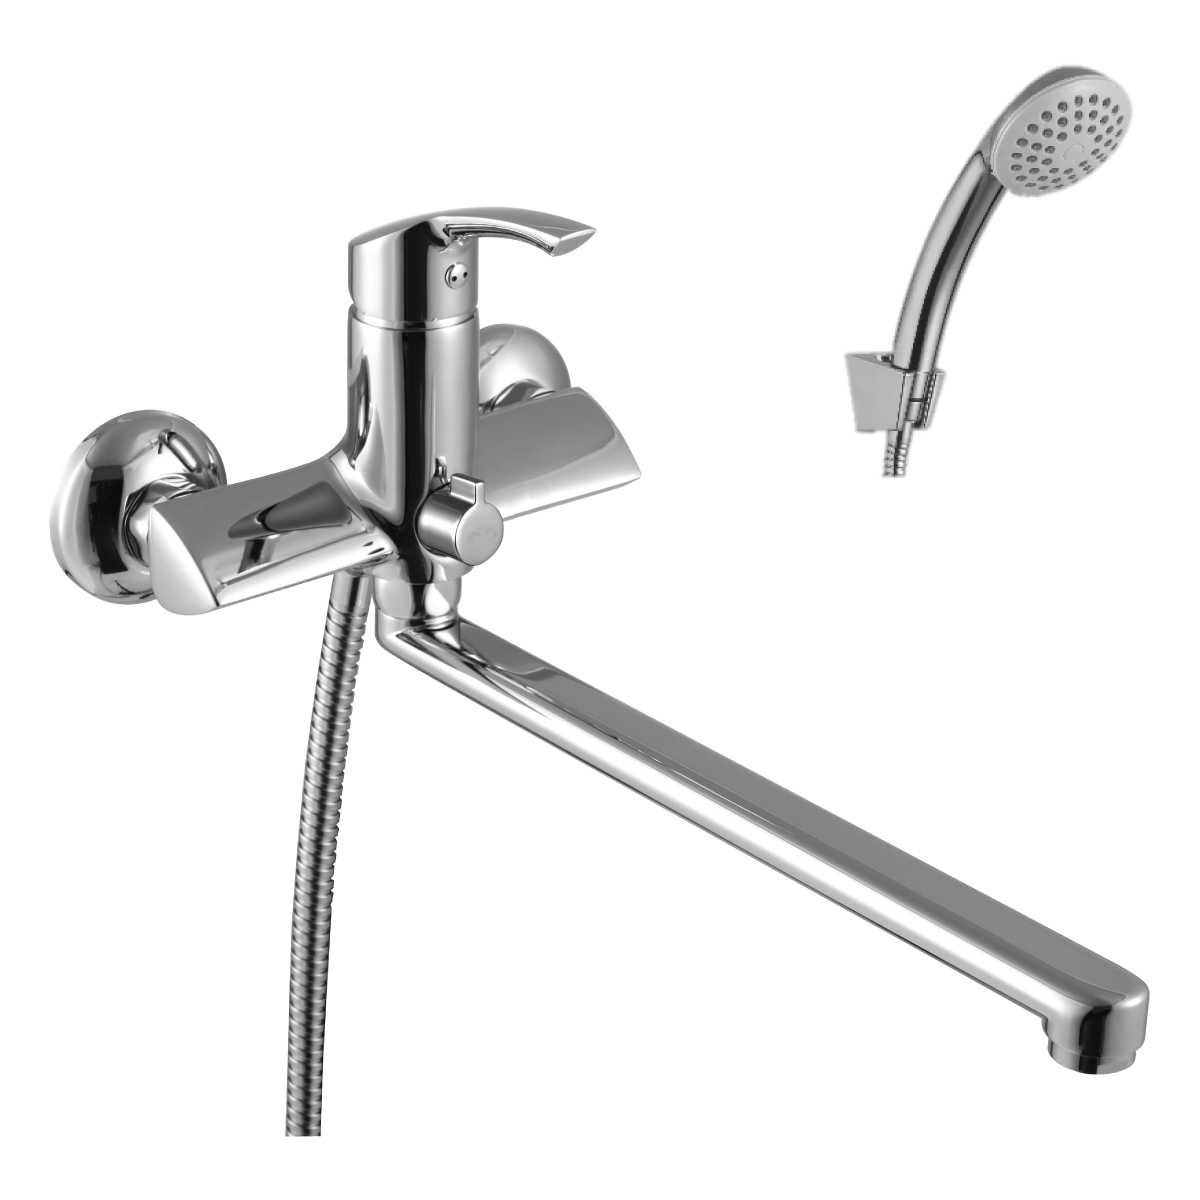 LM1151C Washbasin/bath faucet
with 300 mm flat swivel spout